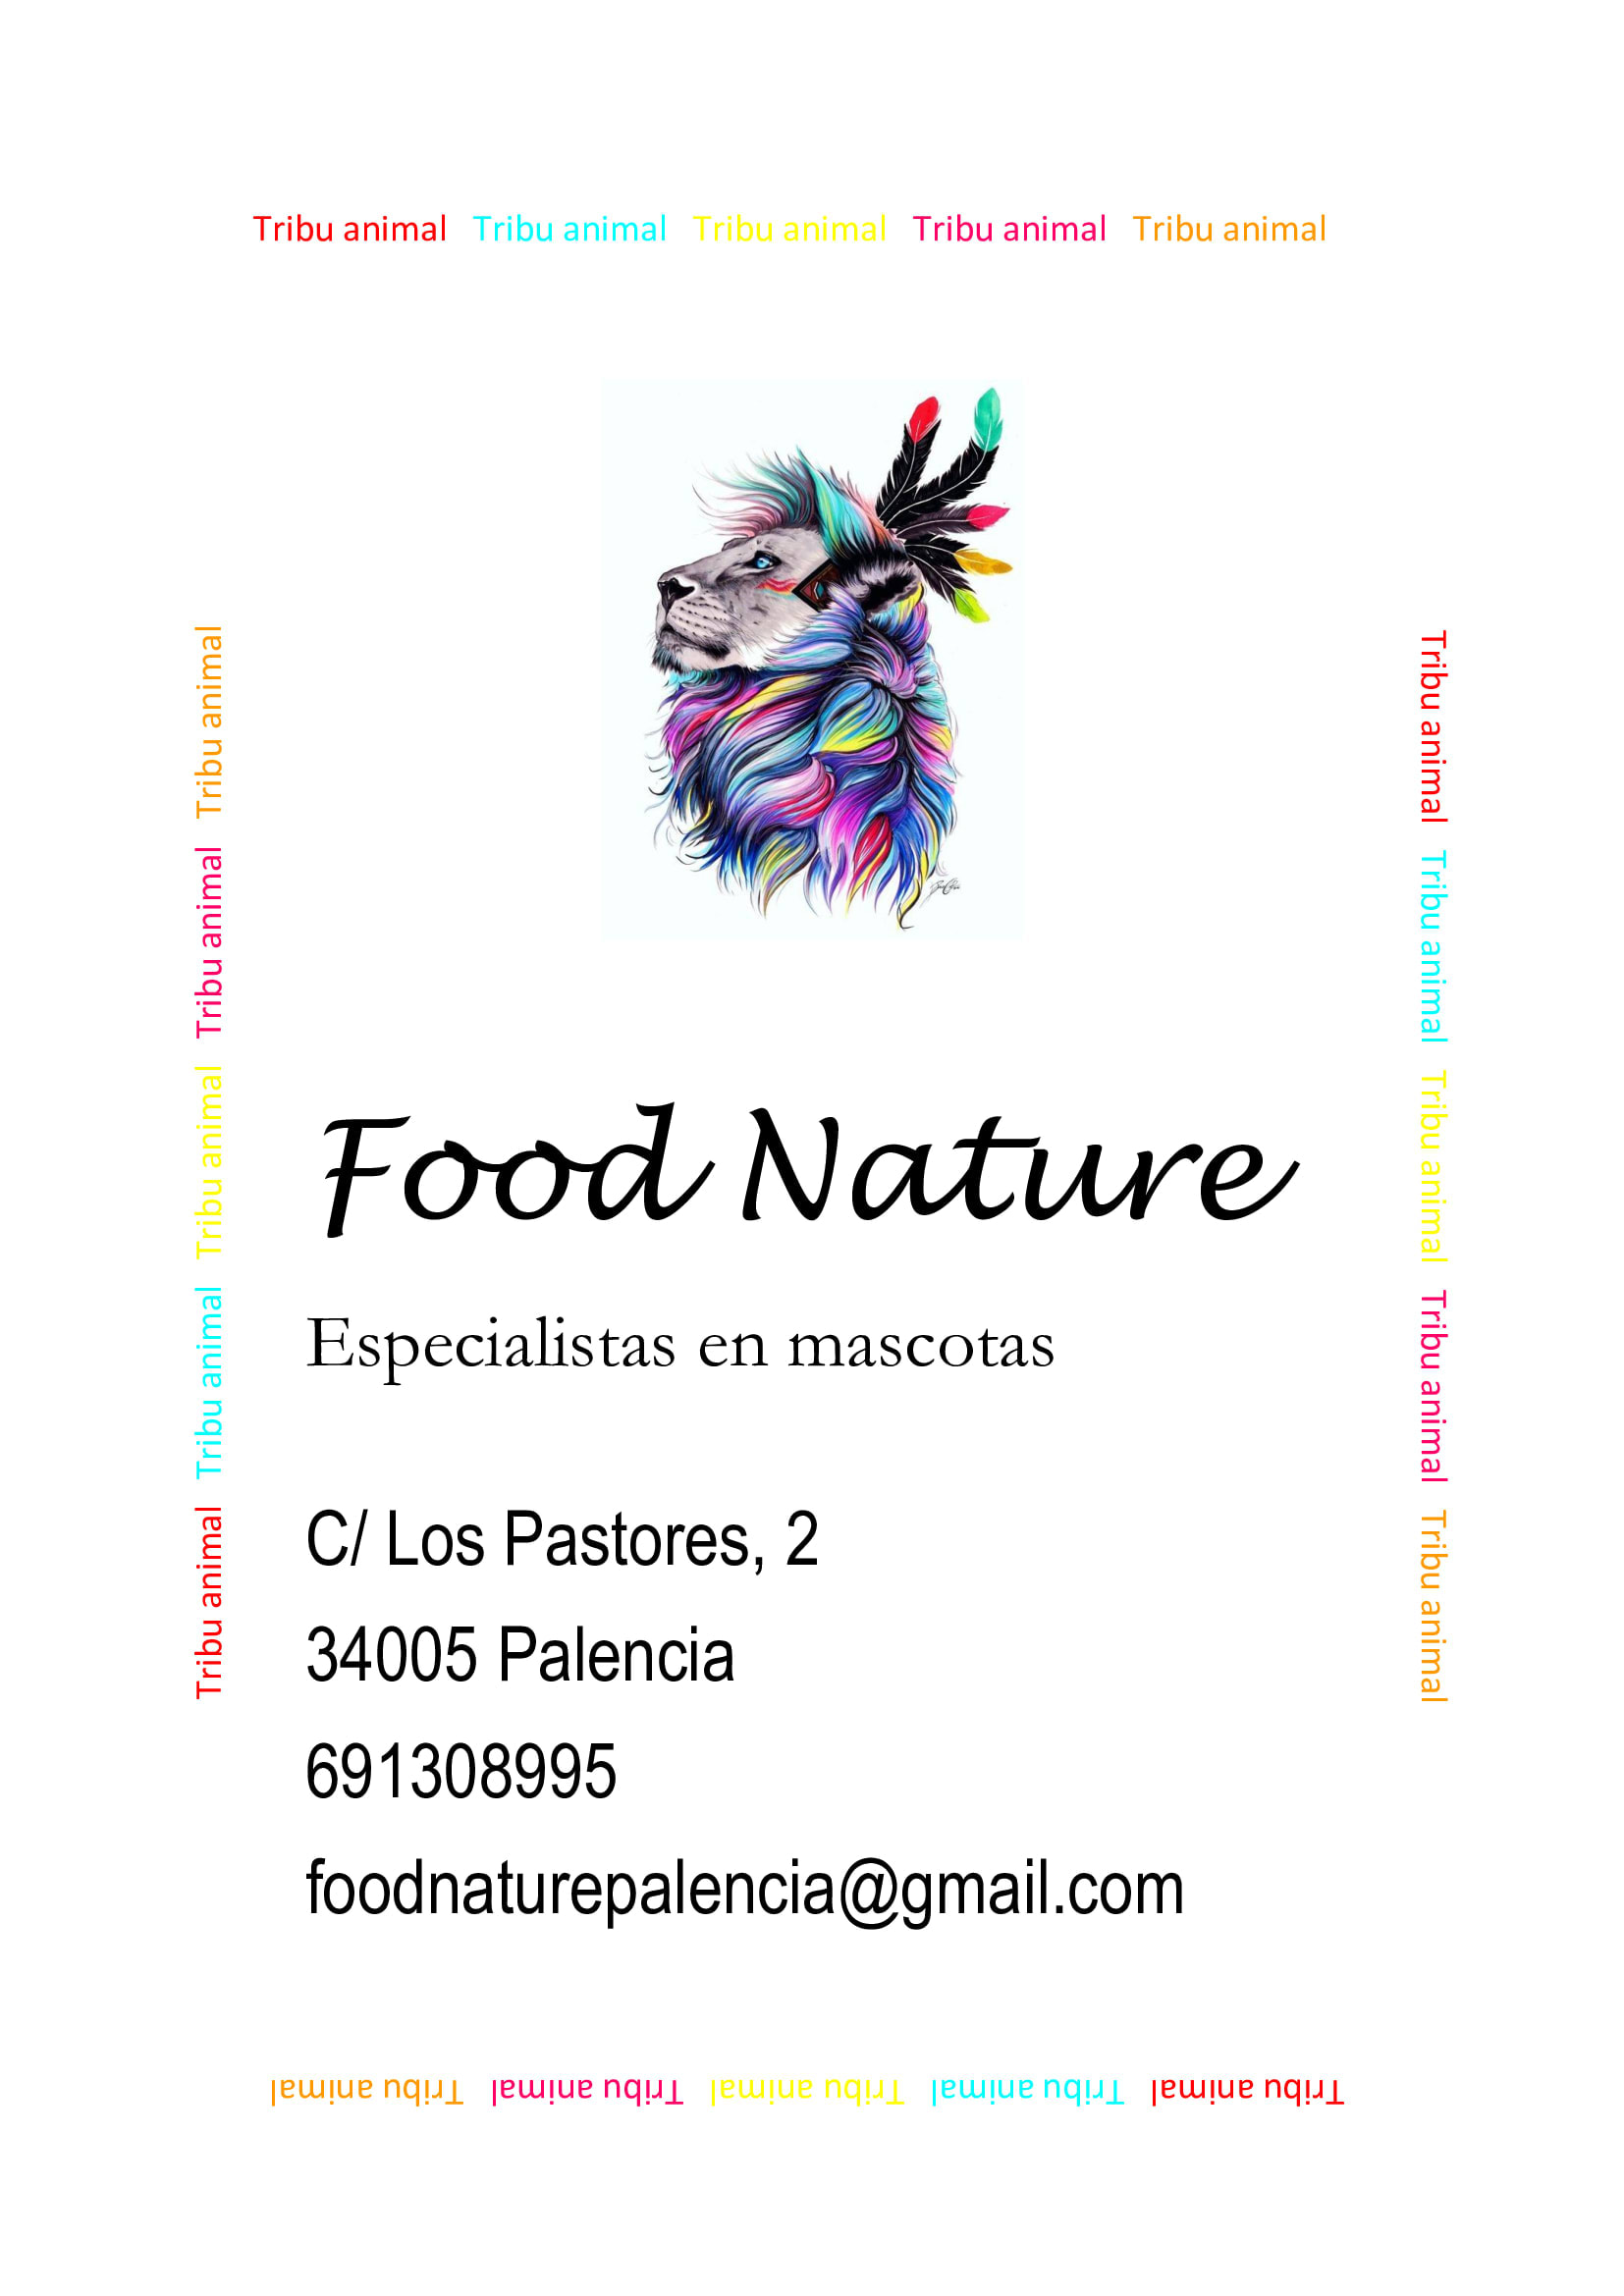 Food Nature Mascota